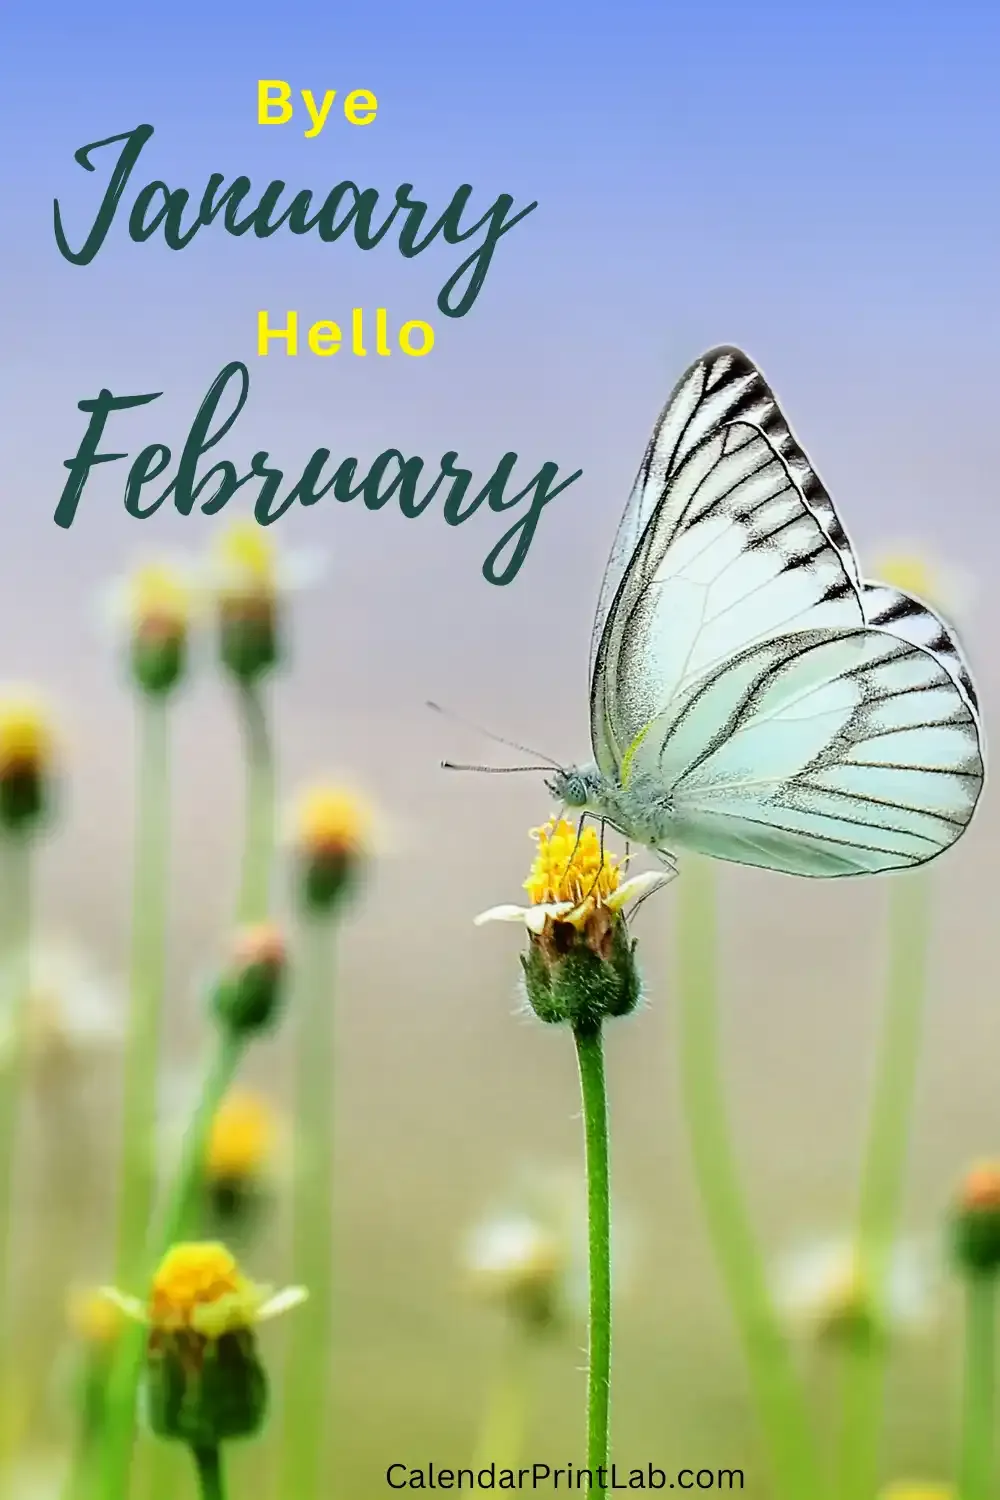 Bye January Hello February Image